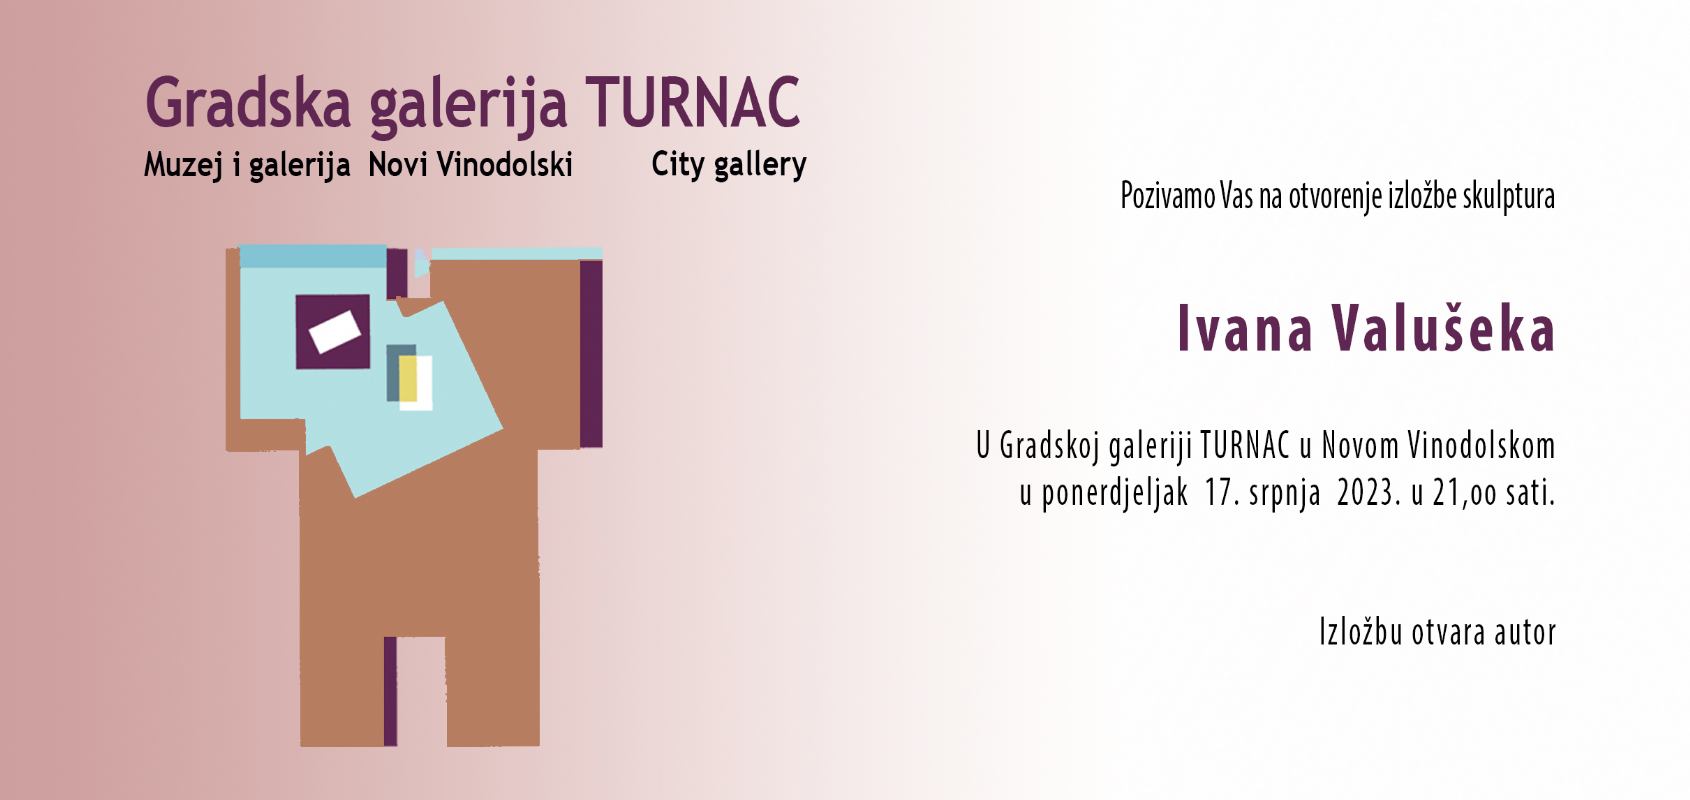 Izložbeni program Gradske galerije Turnac